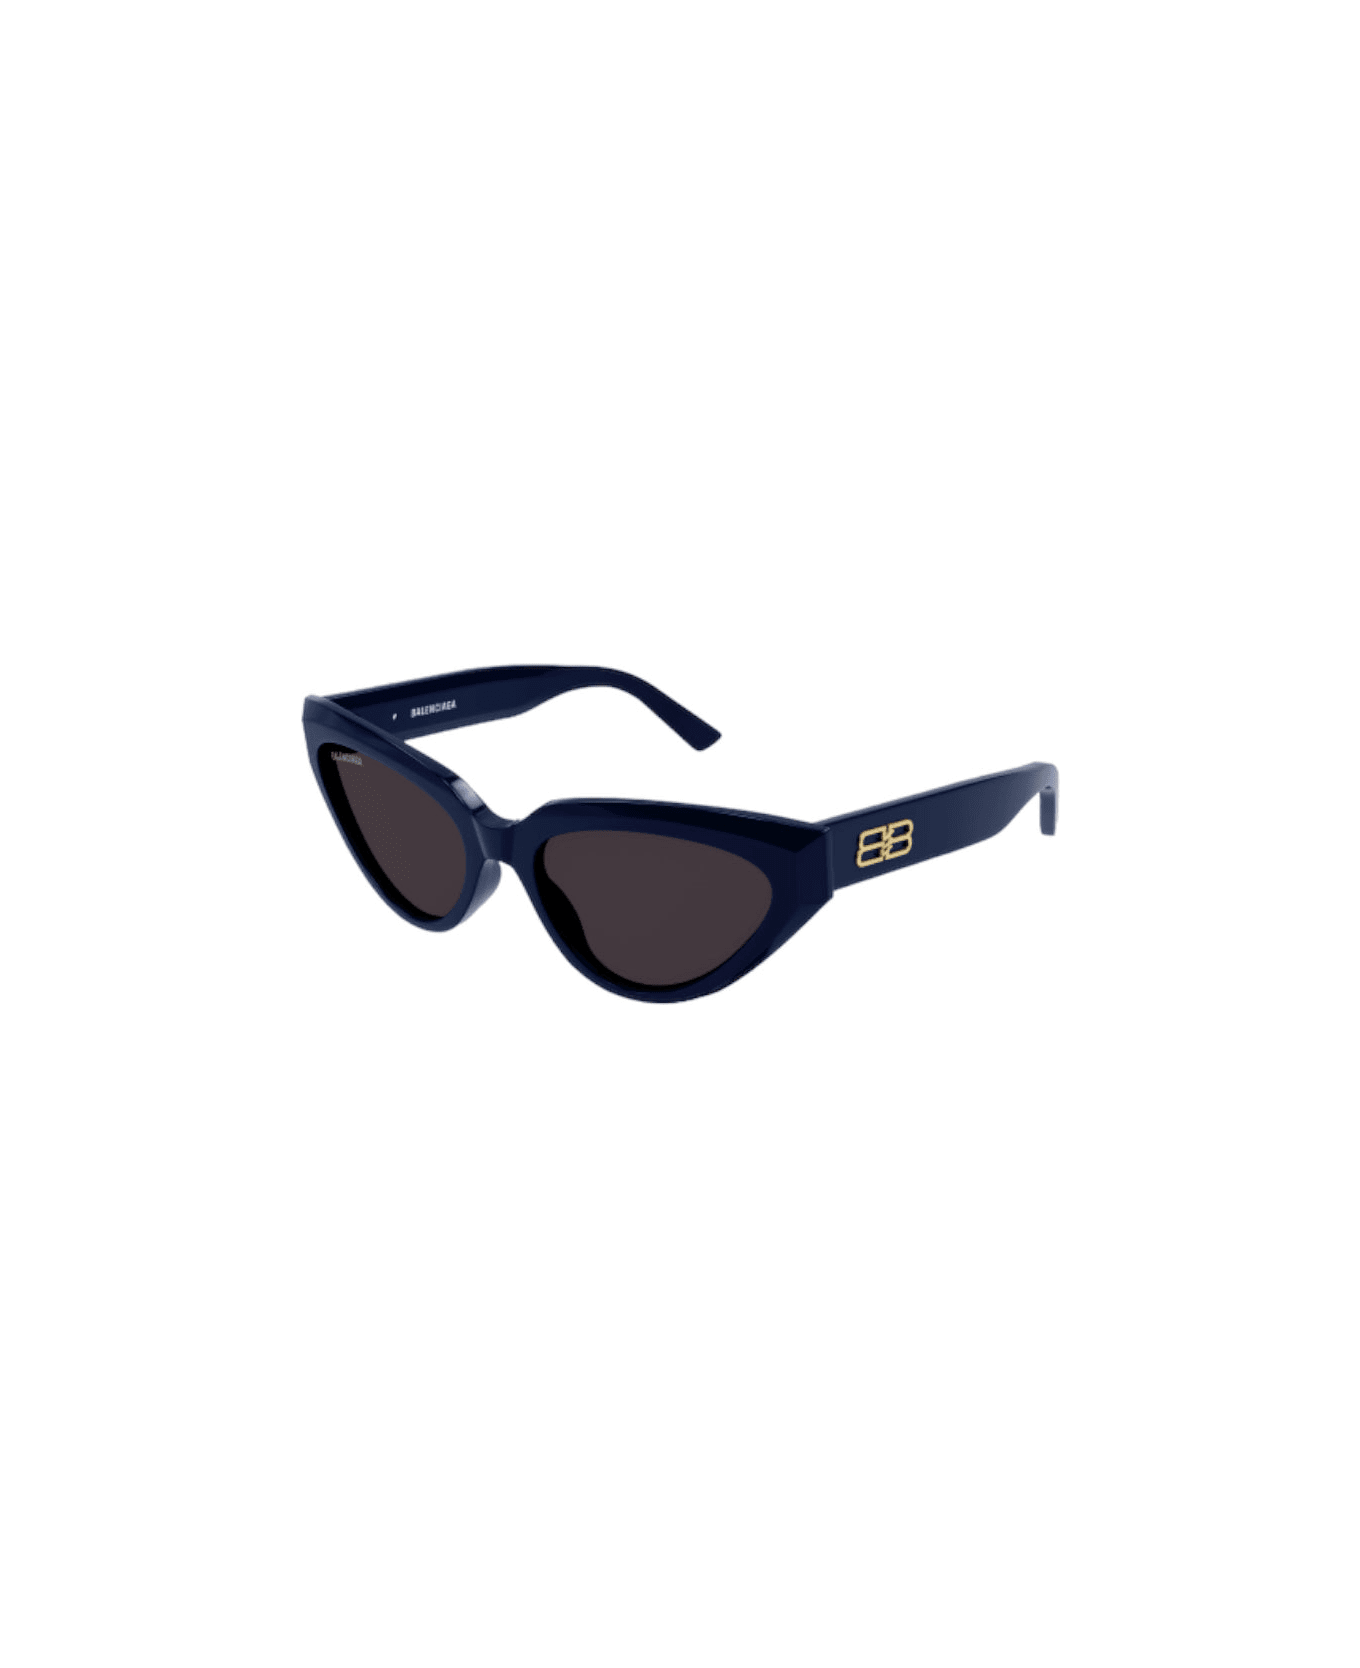 Balenciaga Eyewear Bb0270 Sunglasses サングラス